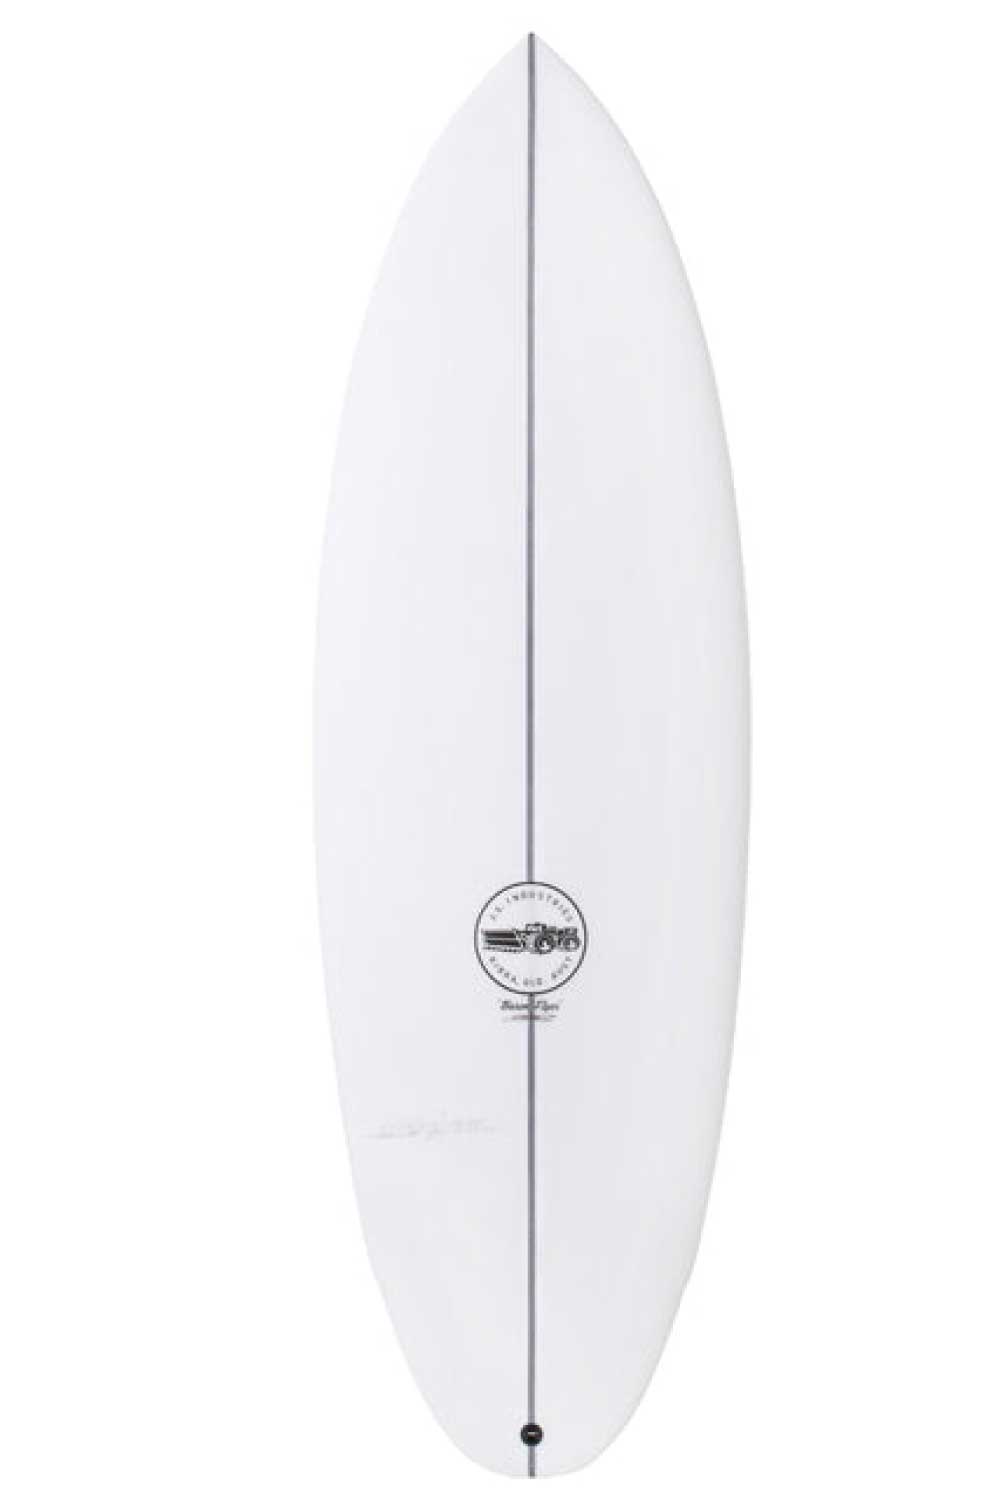 JS Industries Baron Flyer Surfboard